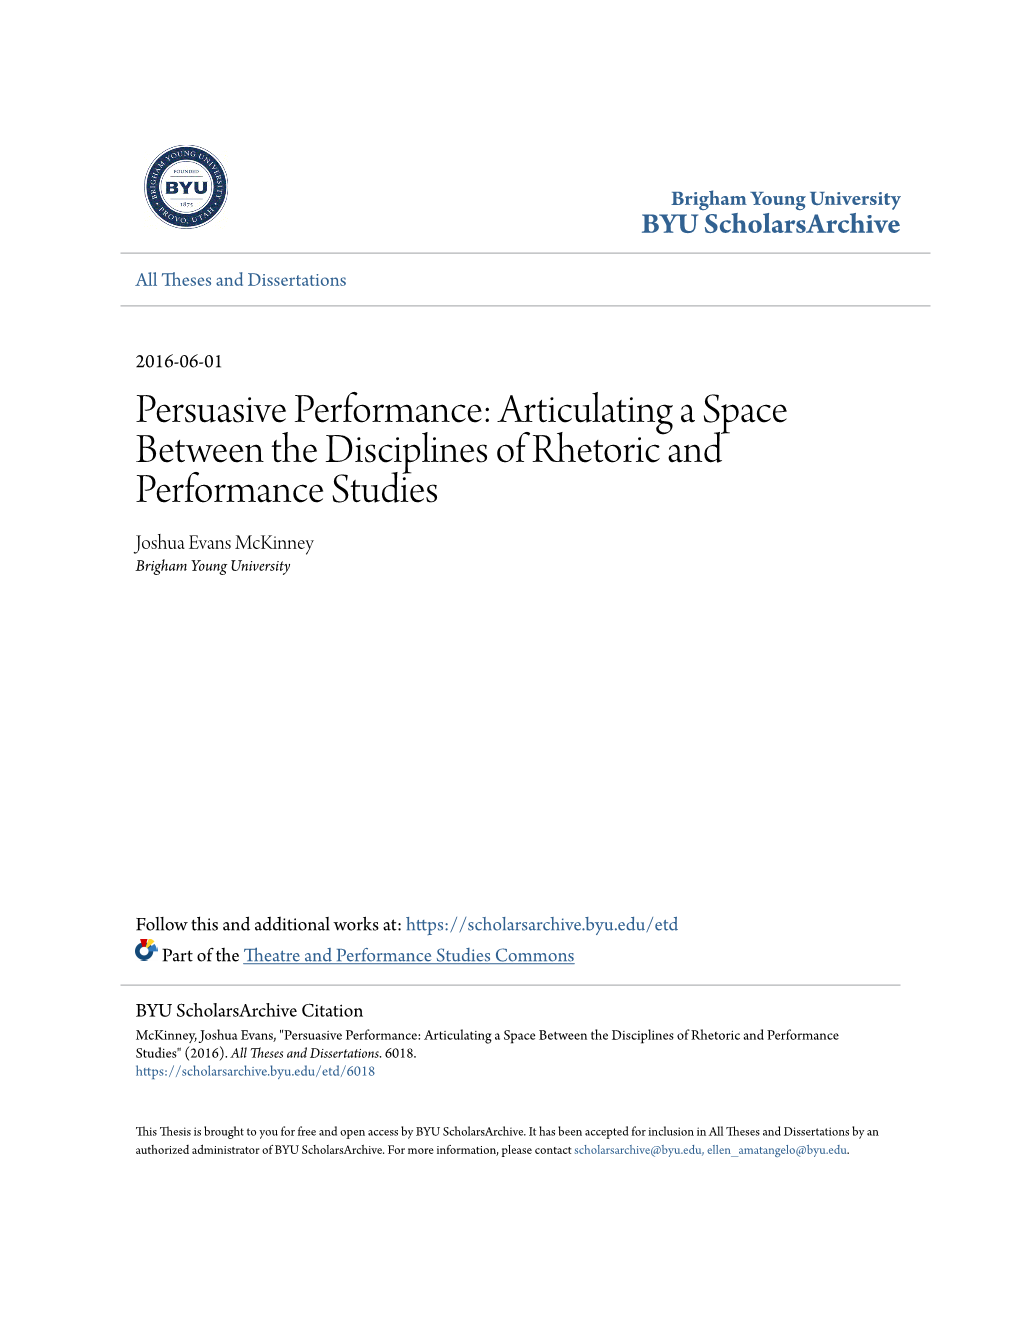 Persuasive Performance: Articulating a Space Between the Disciplines of Rhetoric and Performance Studies Joshua Evans Mckinney Brigham Young University